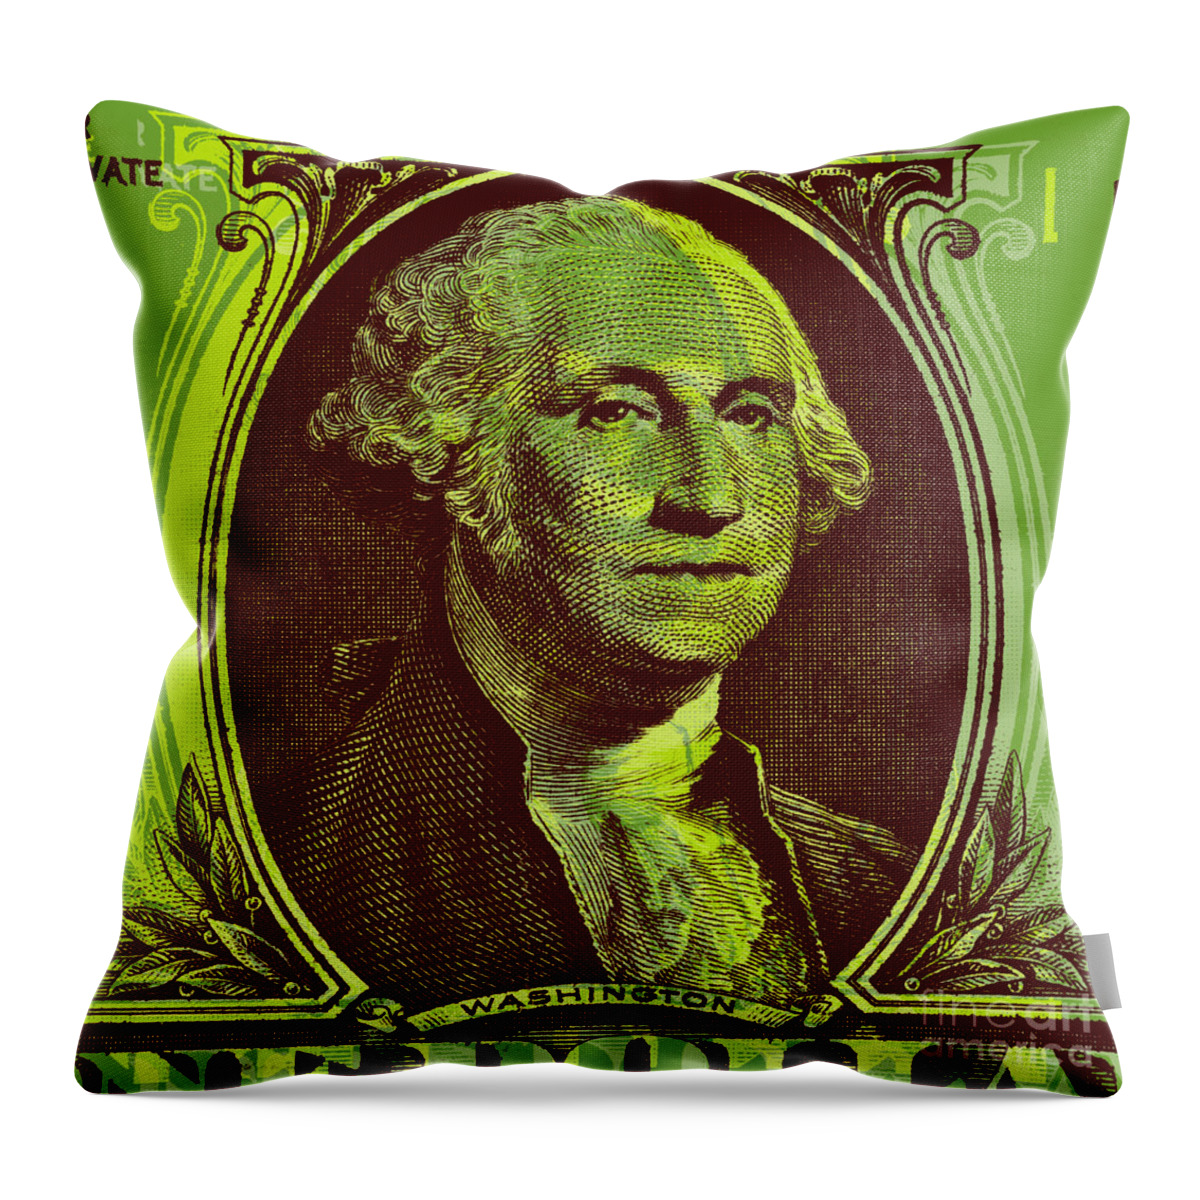 George Washington Throw Pillow featuring the digital art George Washington - $1 bill by Jean luc Comperat